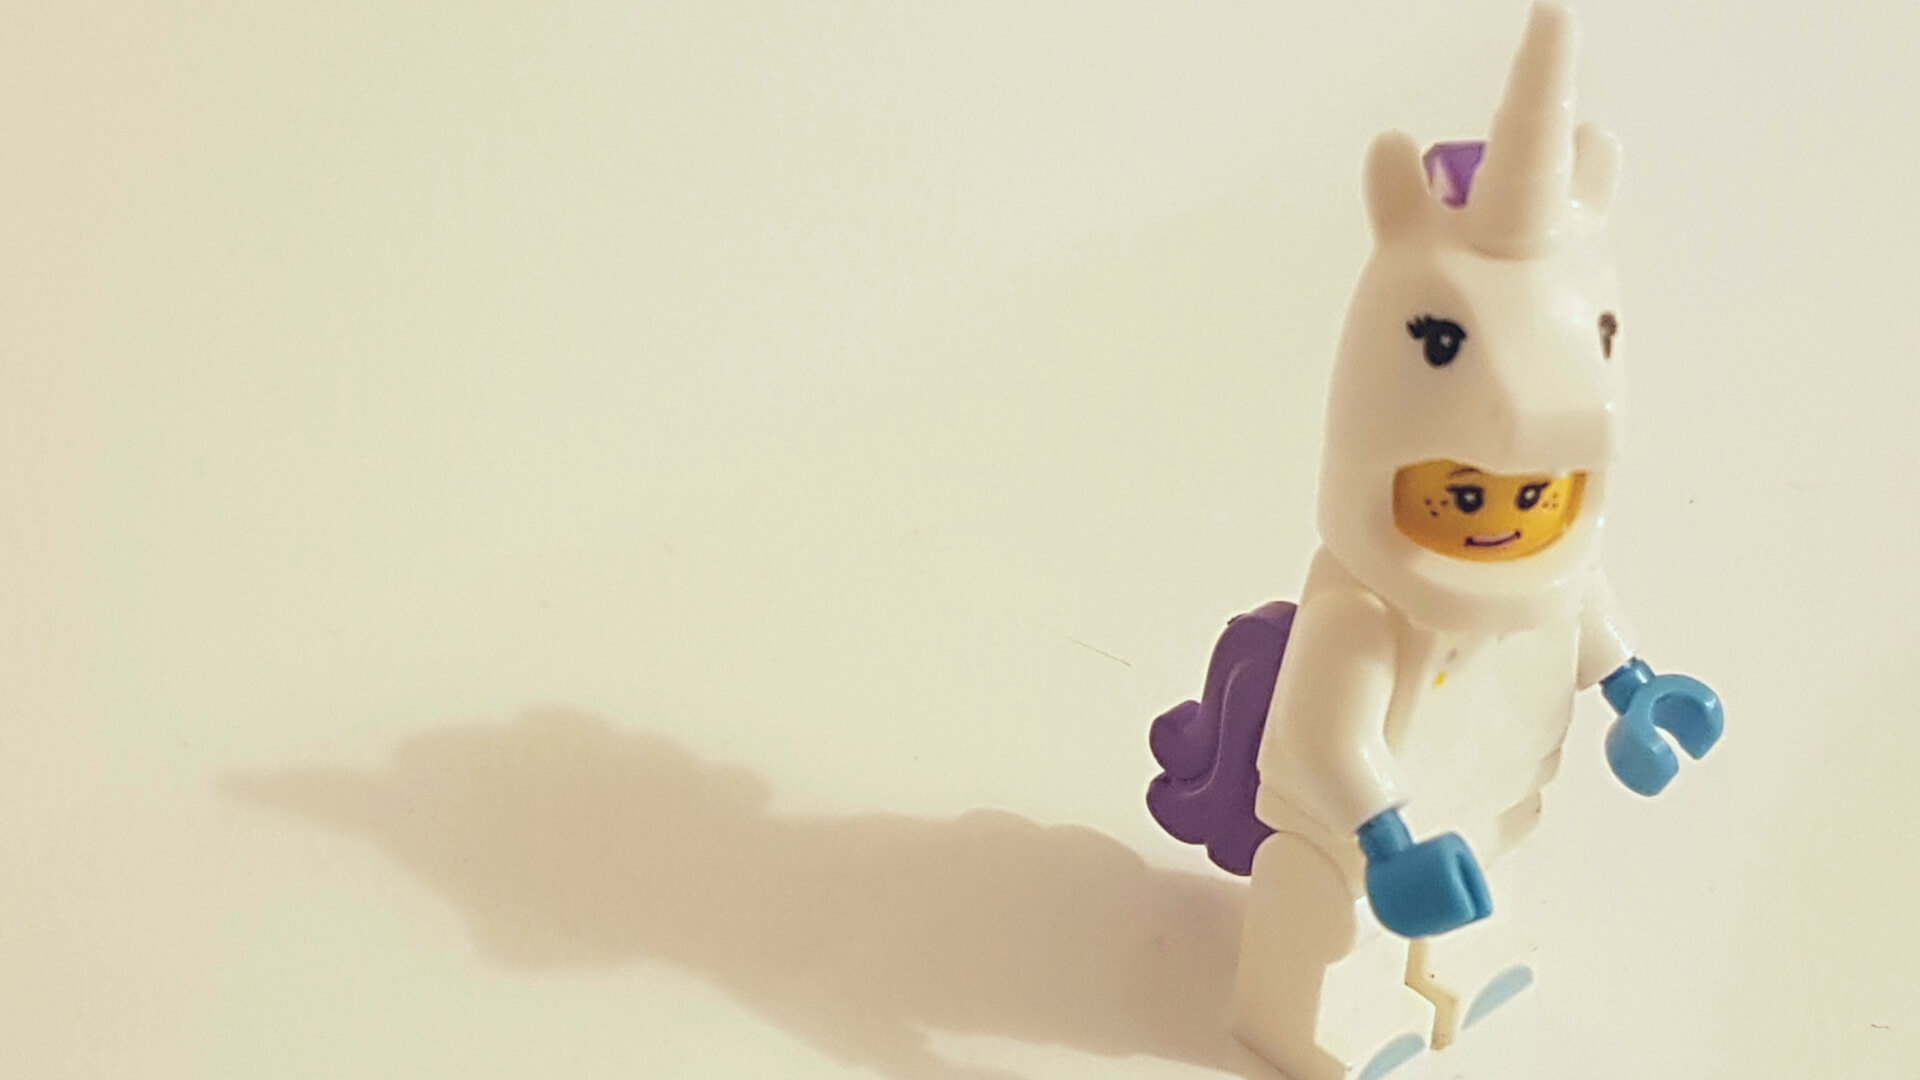 lego figure dresses as unicorn